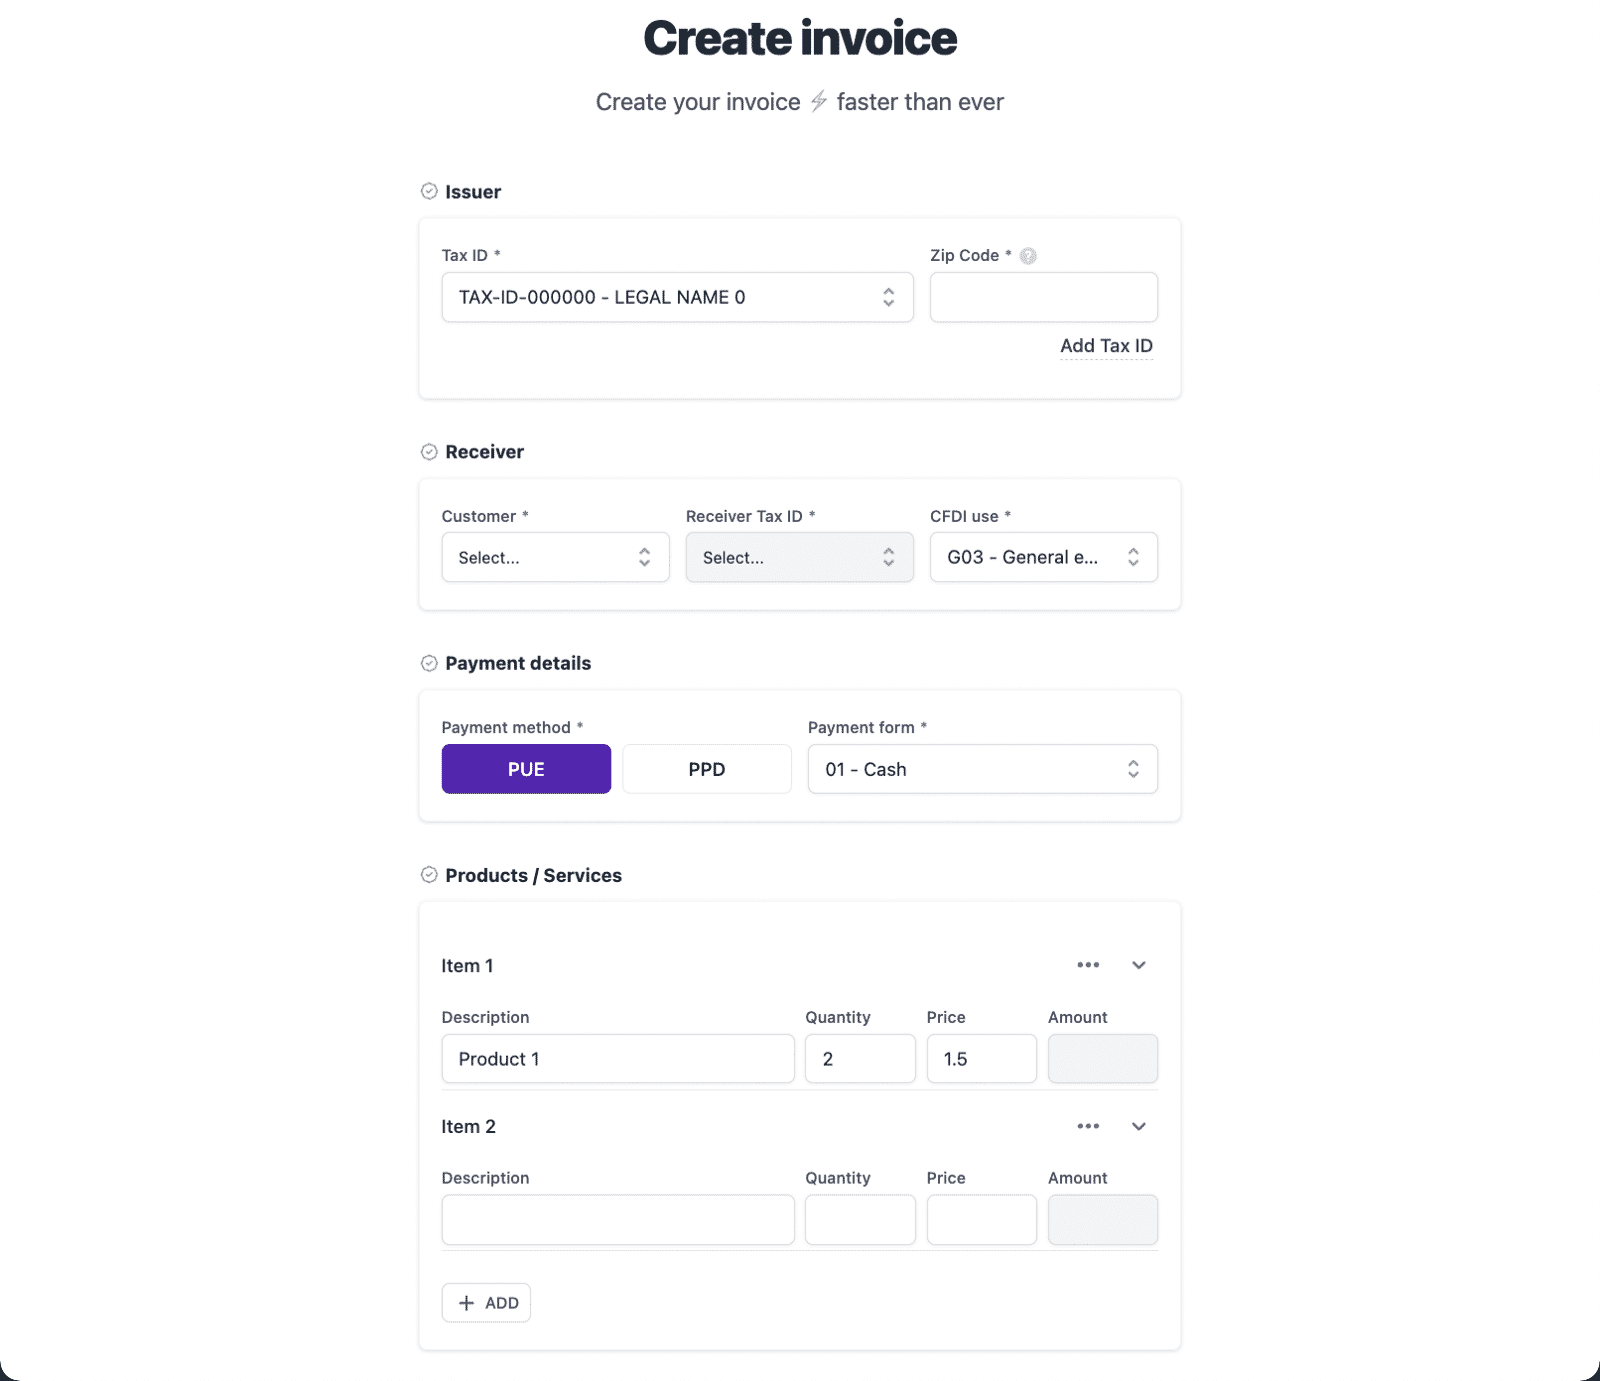 My Create Invoice Form